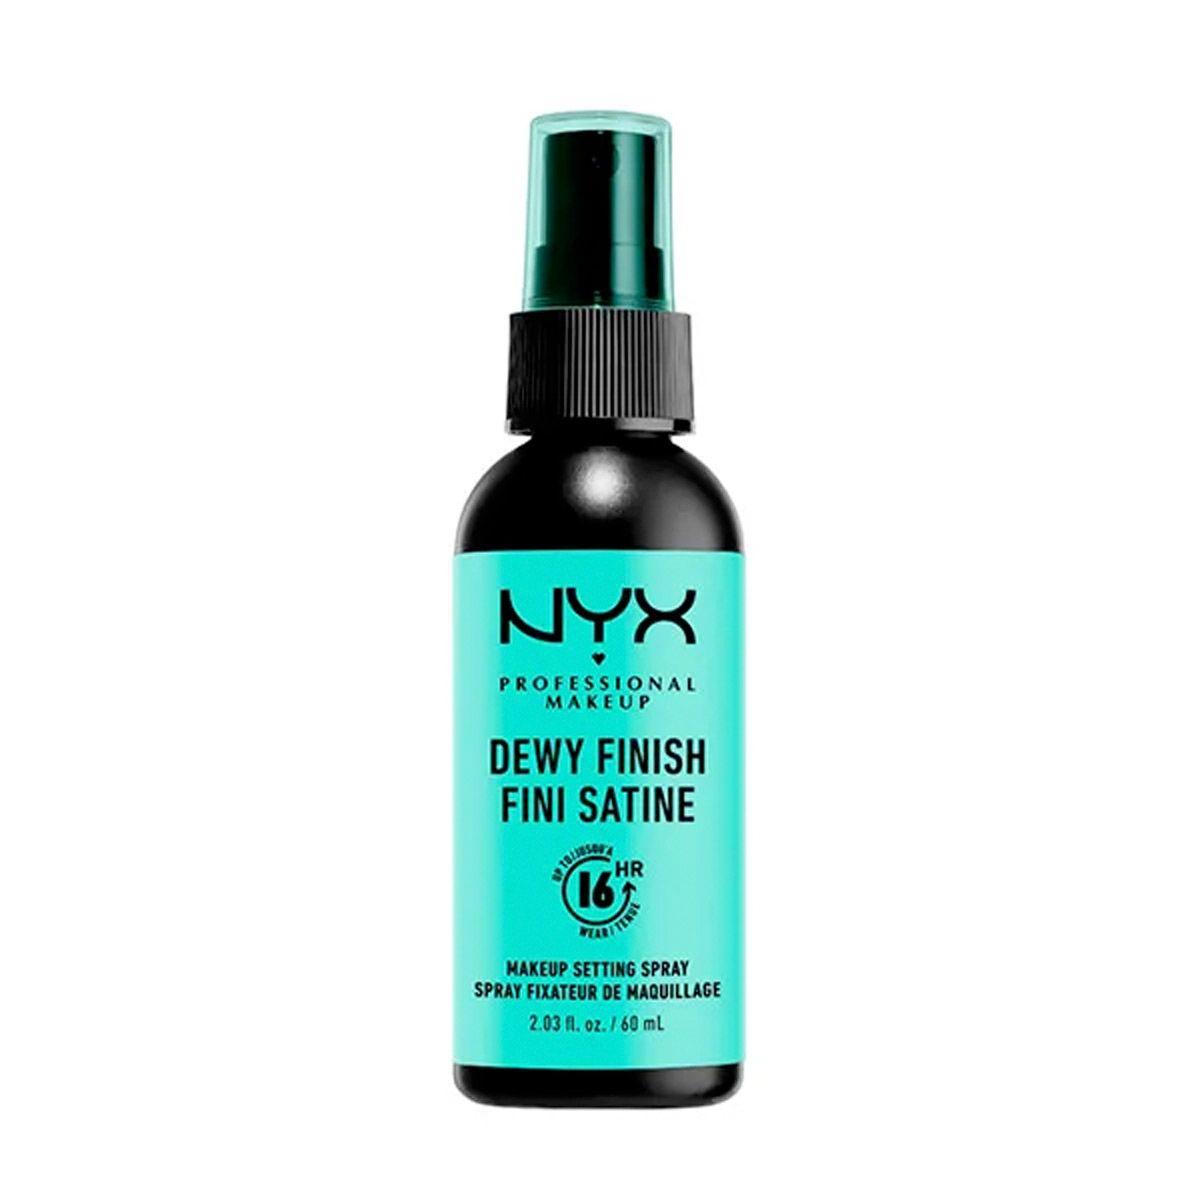 Spray fijador de maquillaje' Setting spray dewy', de NYX